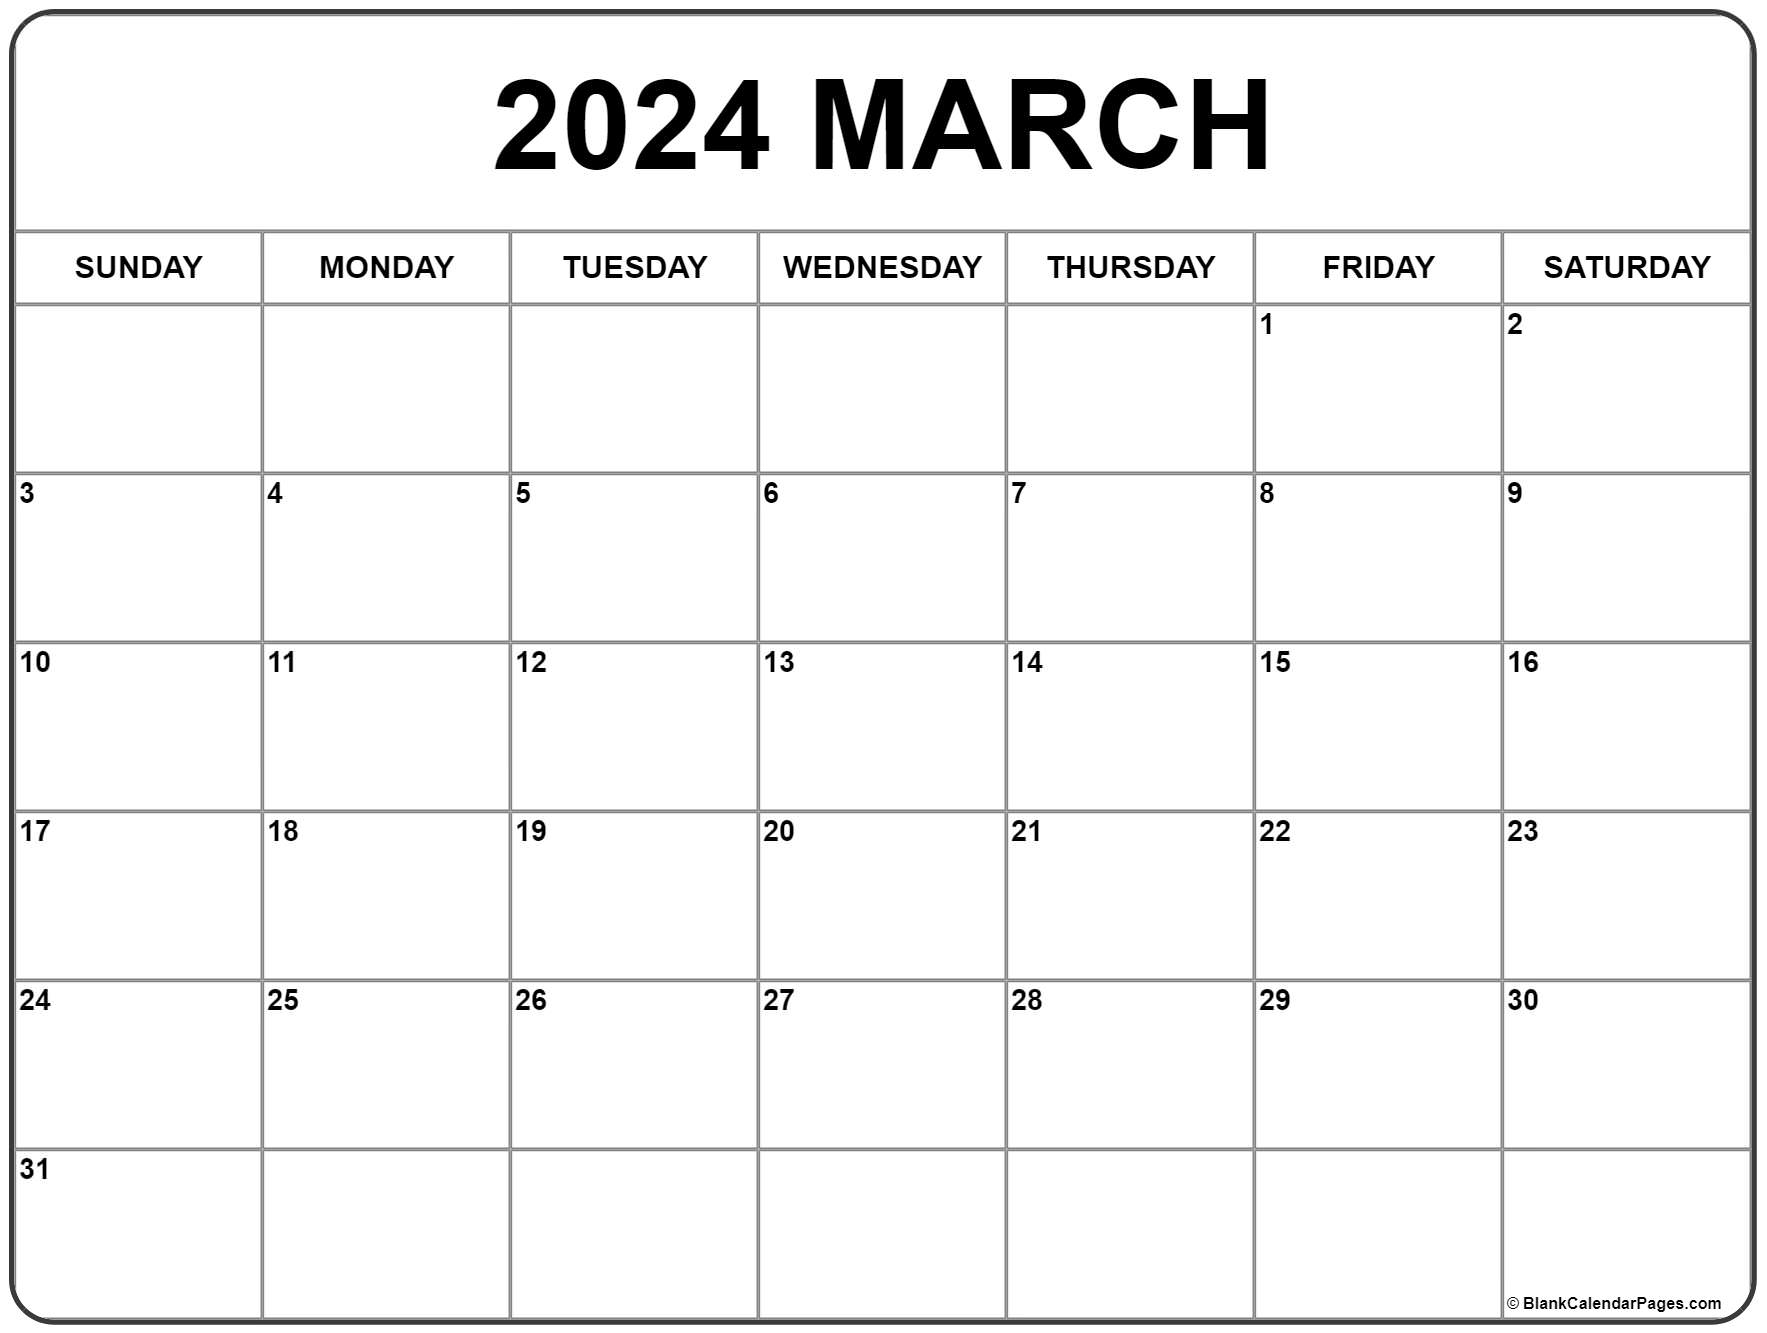 March 2024 Calendar | Free Printable Calendar for Free Printable March 2024 Calendar Page